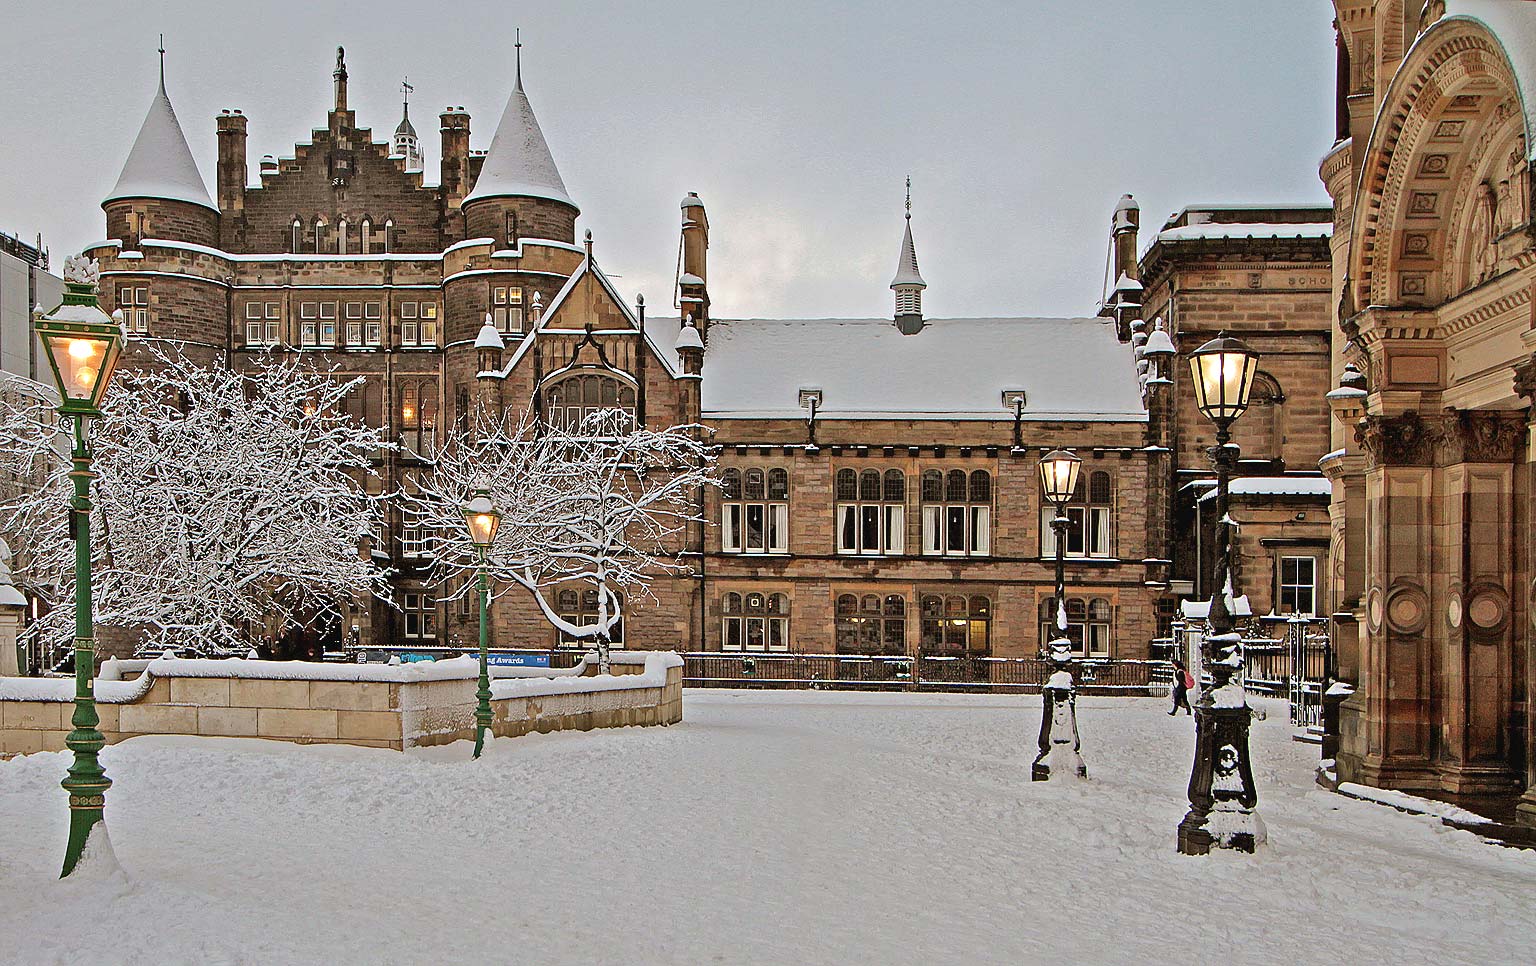 Teviot Place, the home of the Edinburgh University Student's Association